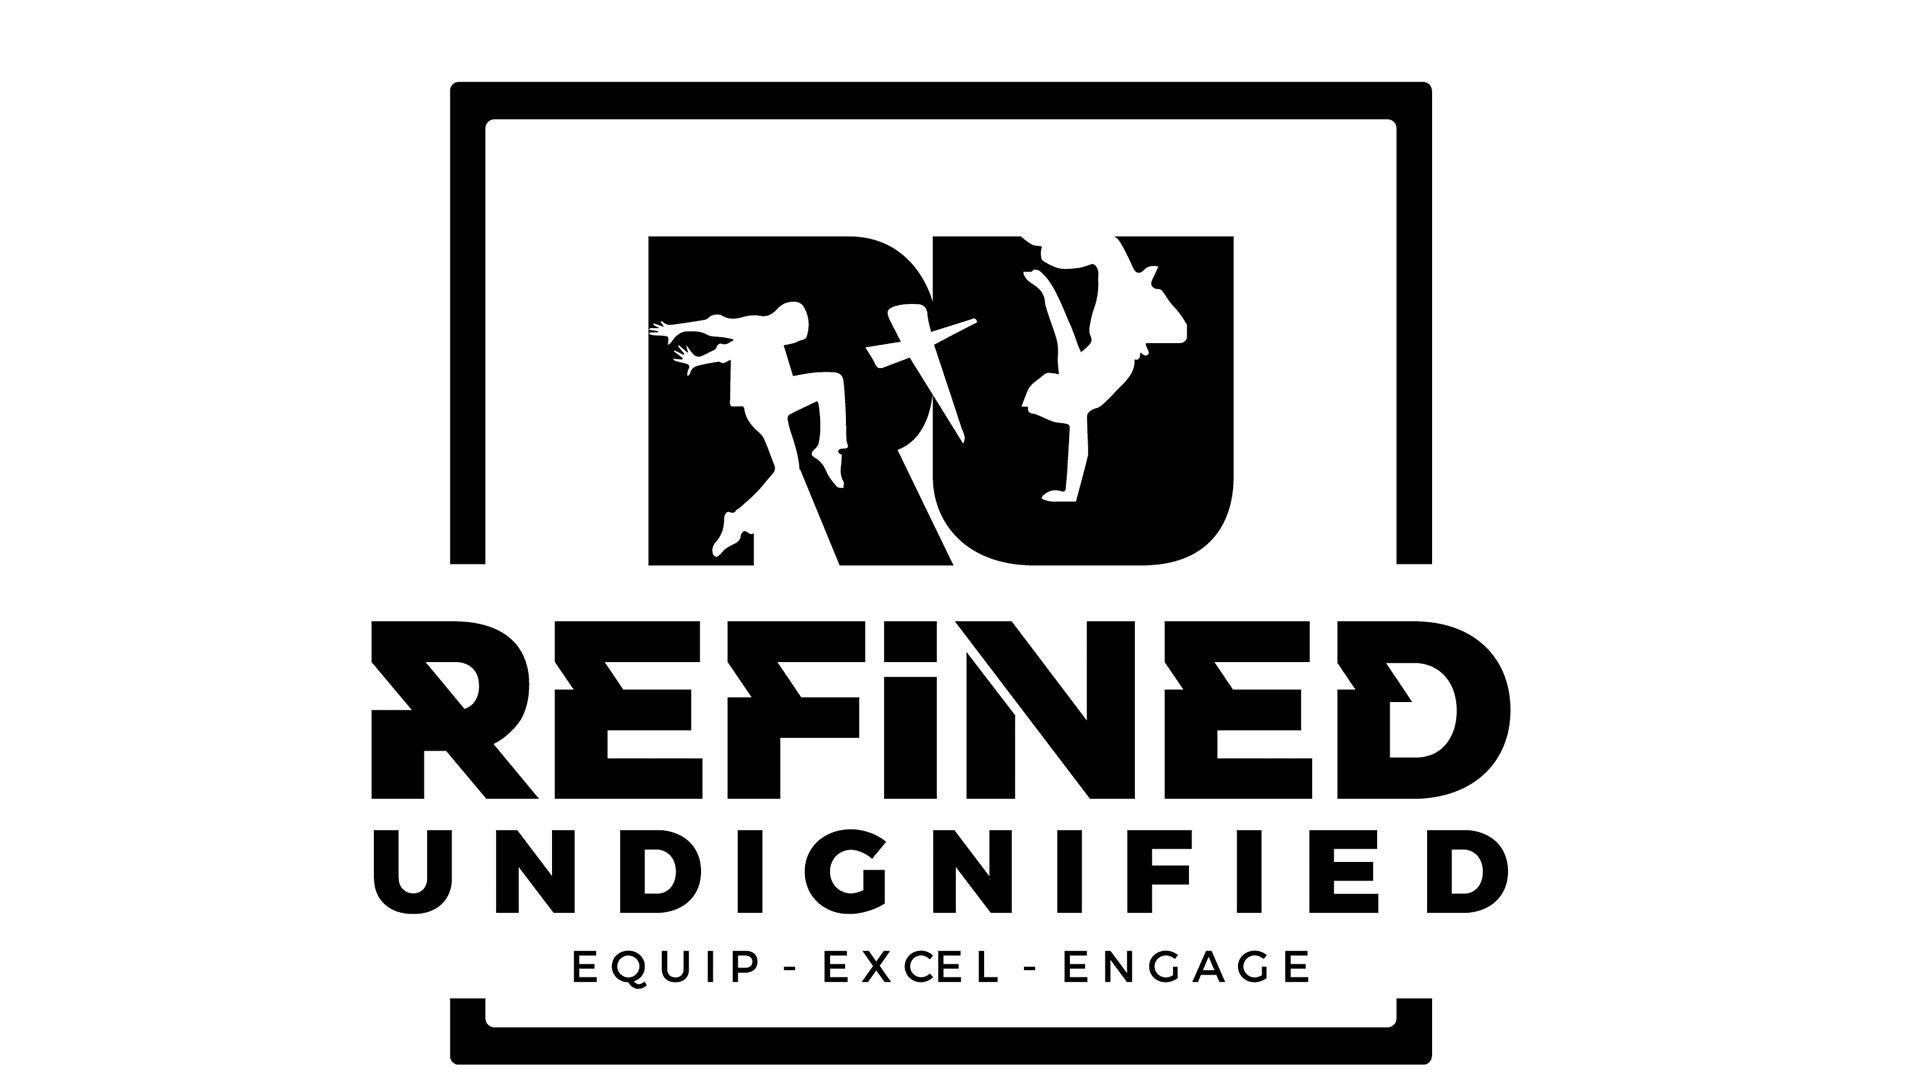 Refined / Undignified logo